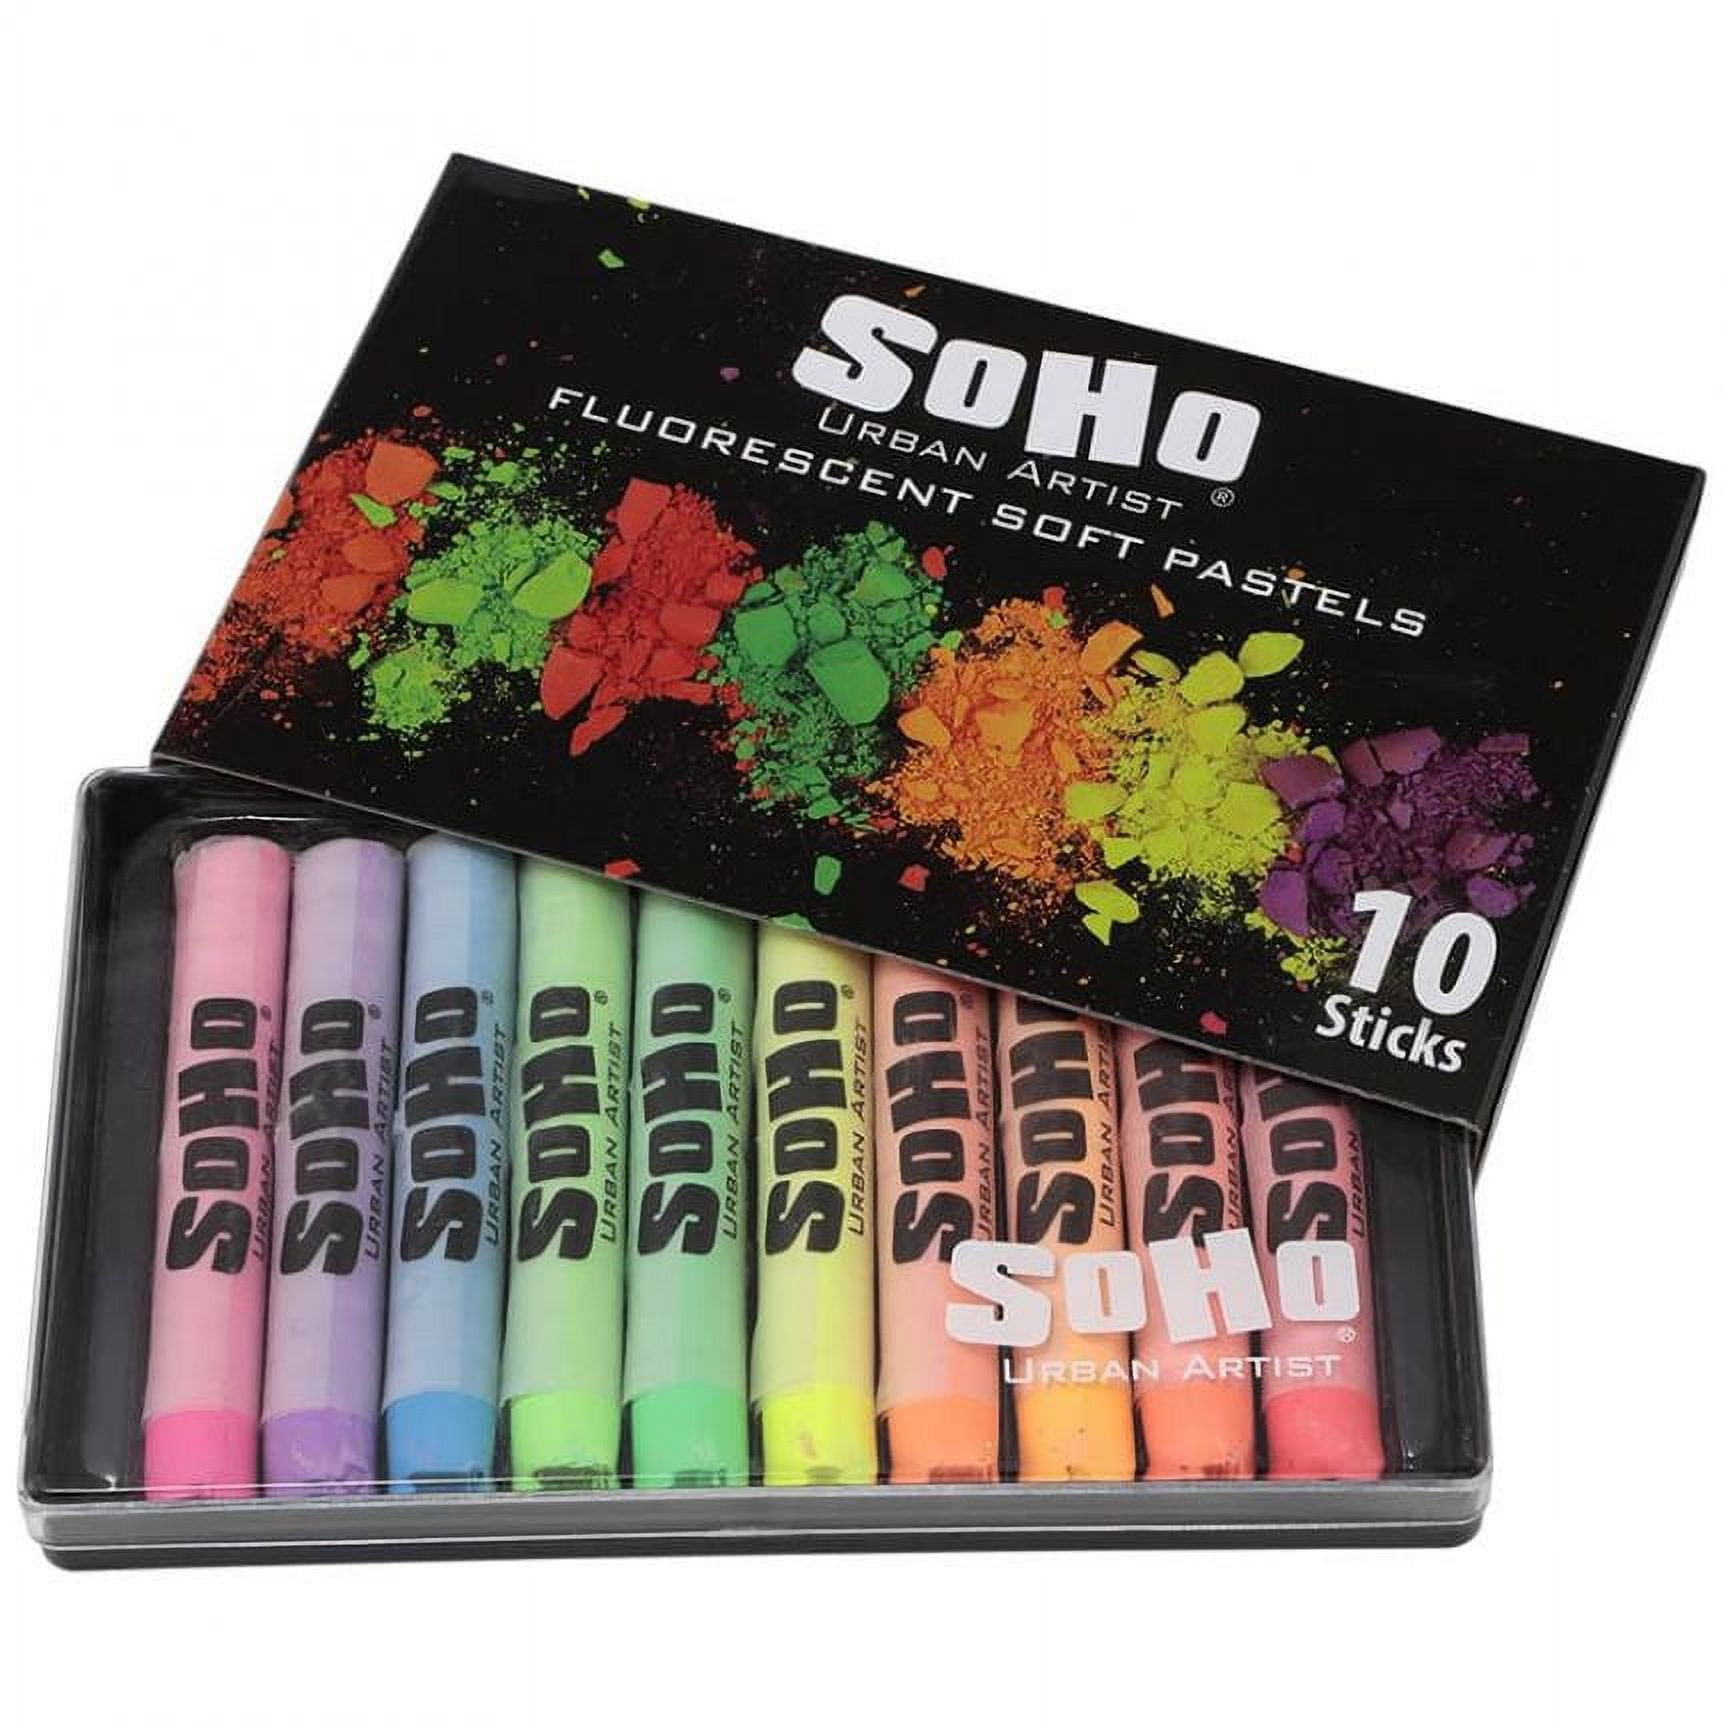 SoHo Urban Artist Soft Pastels Set of 10 Bright Fluorescent Neon